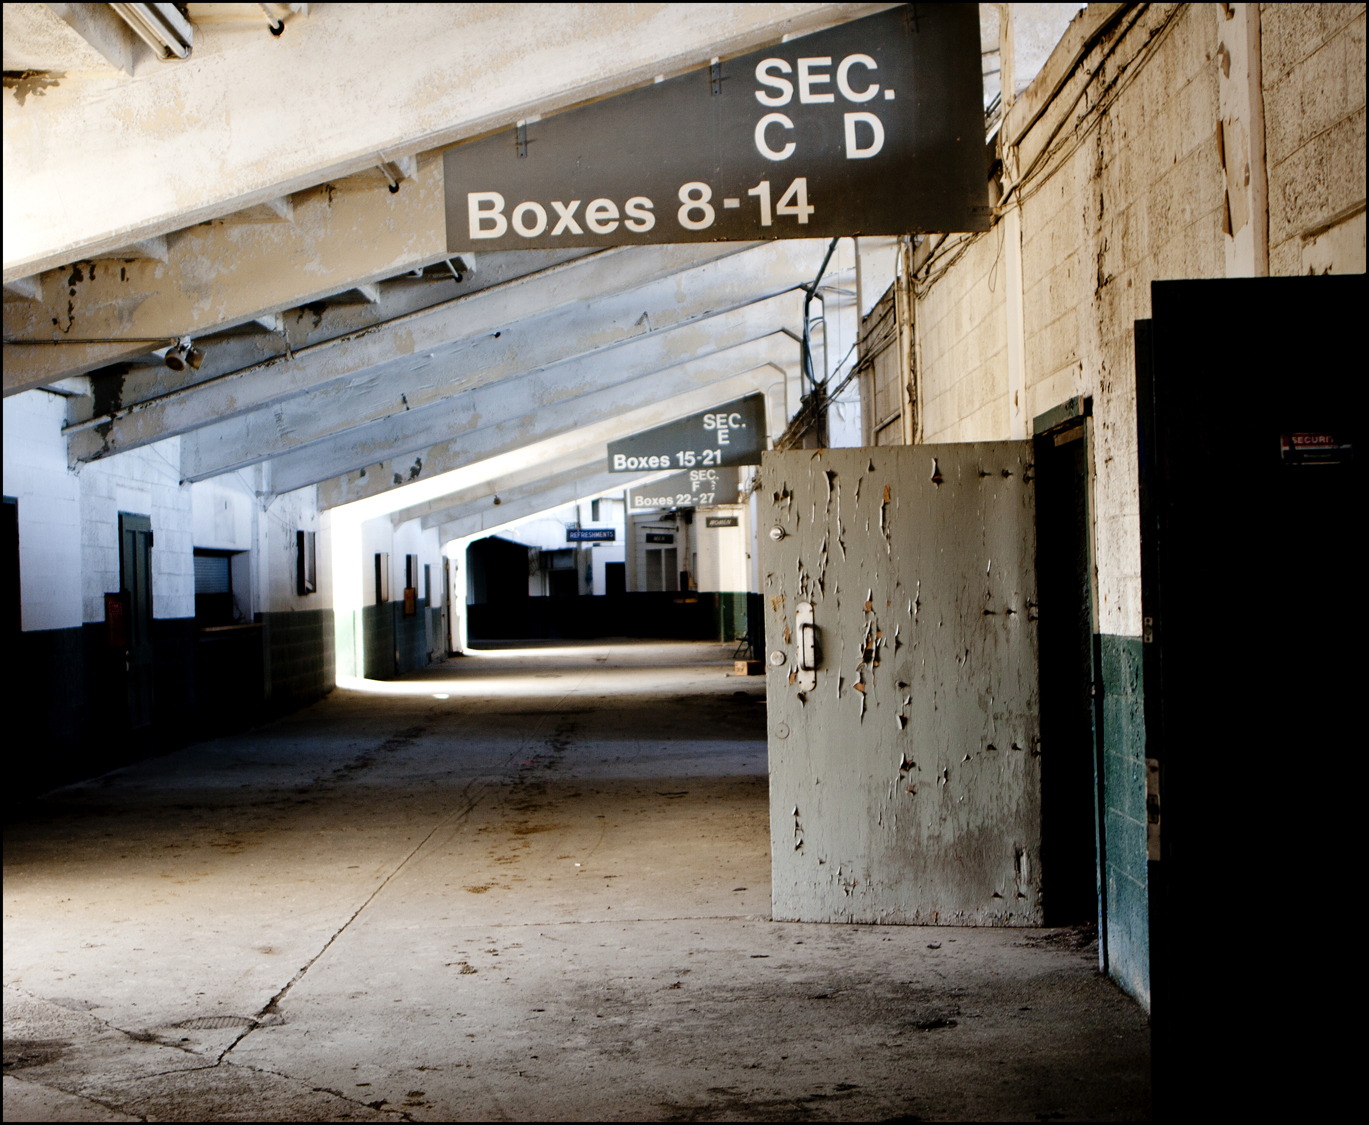 Section C-D
Boxes 8-14 : Bush Stadium 2012 : BILL FOLEY 